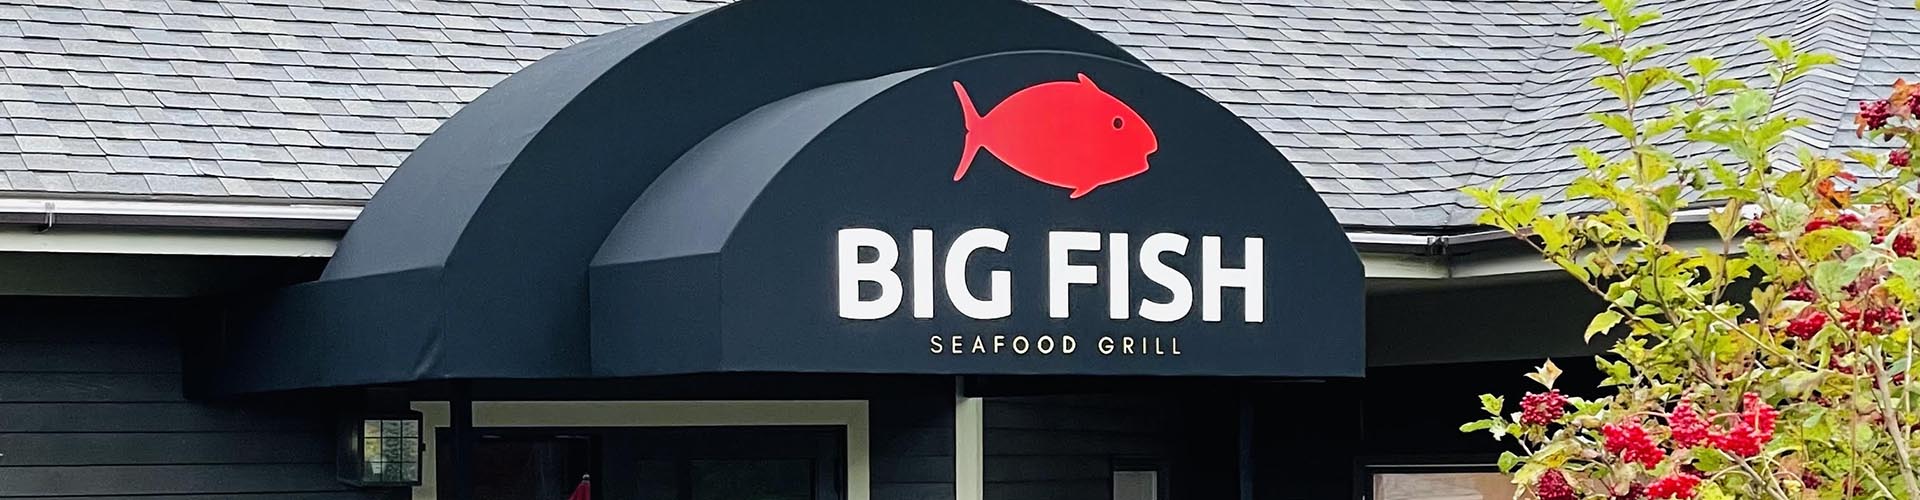 Big Fish Seafood Restaurant Stowe, Vermont